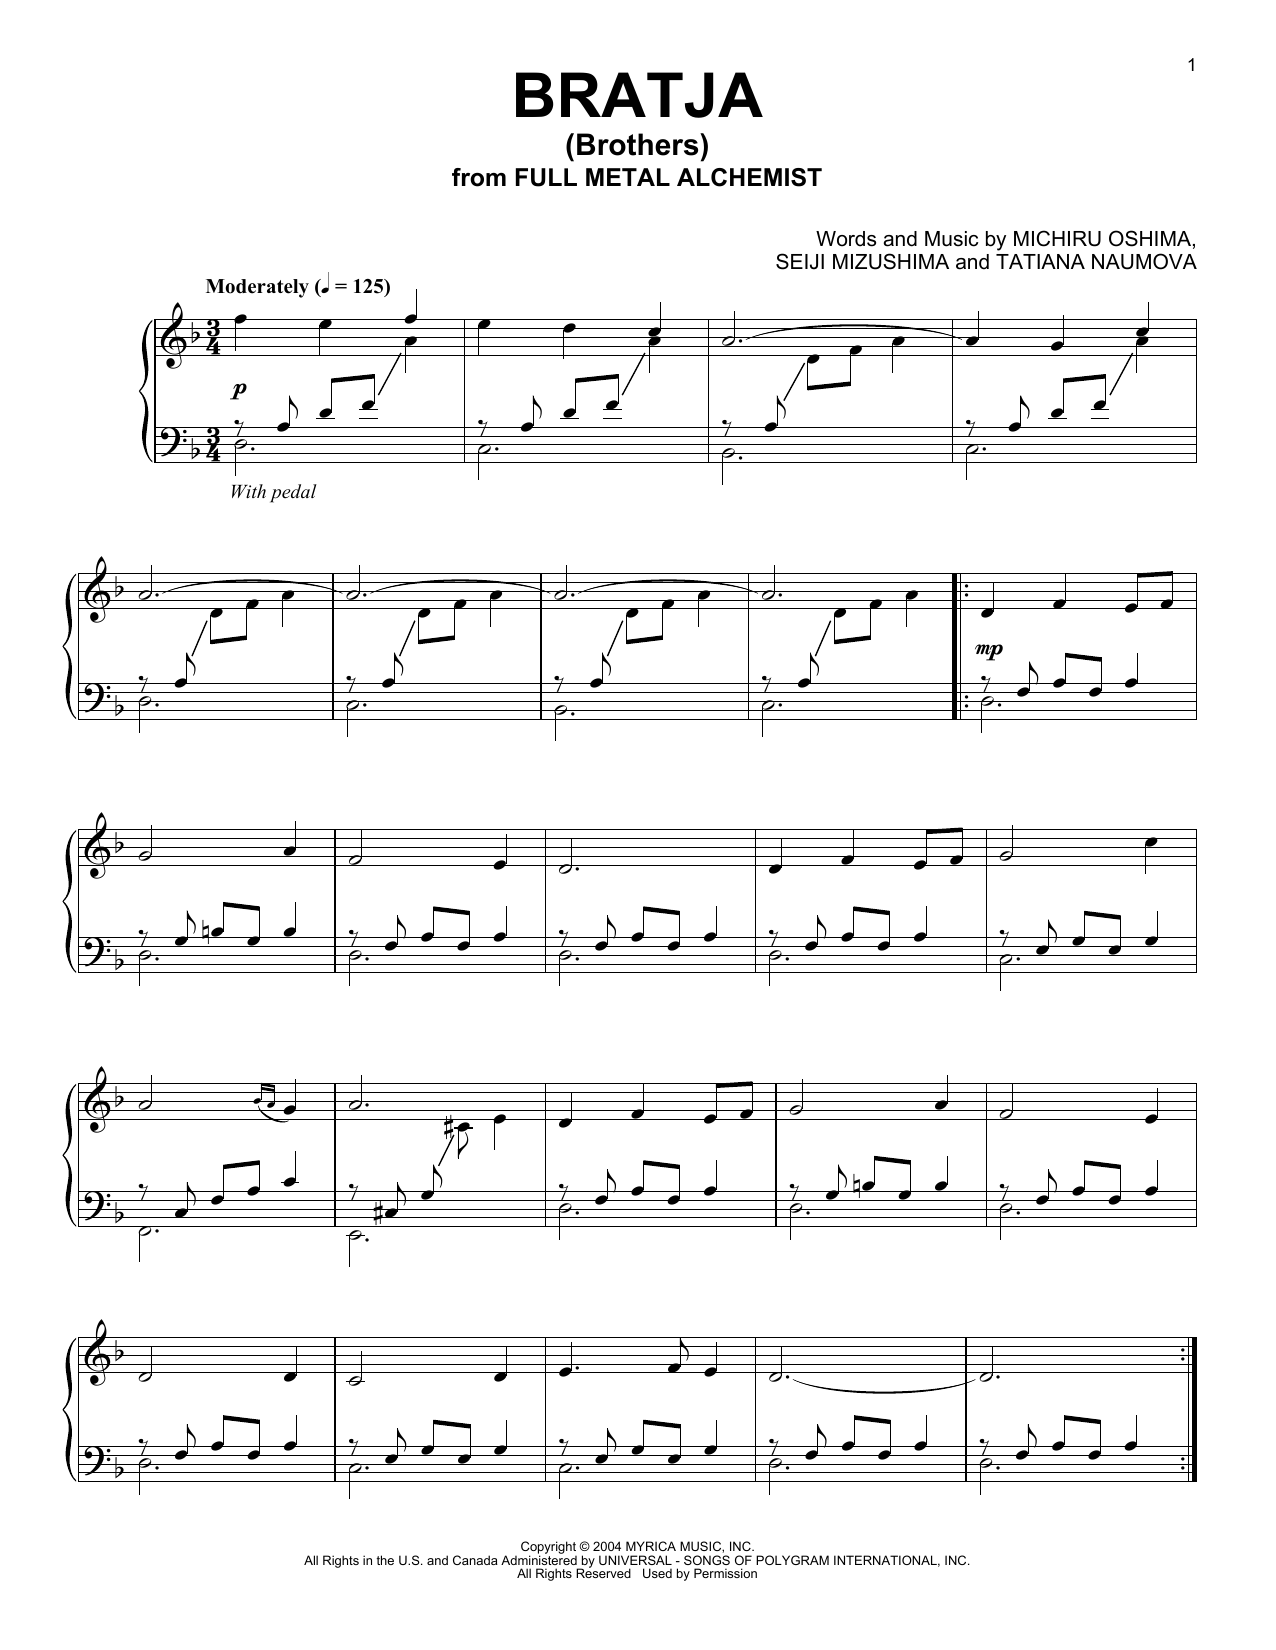 Seiji Mizushima Bratja (Brothers) Sheet Music Notes & Chords for Piano - Download or Print PDF